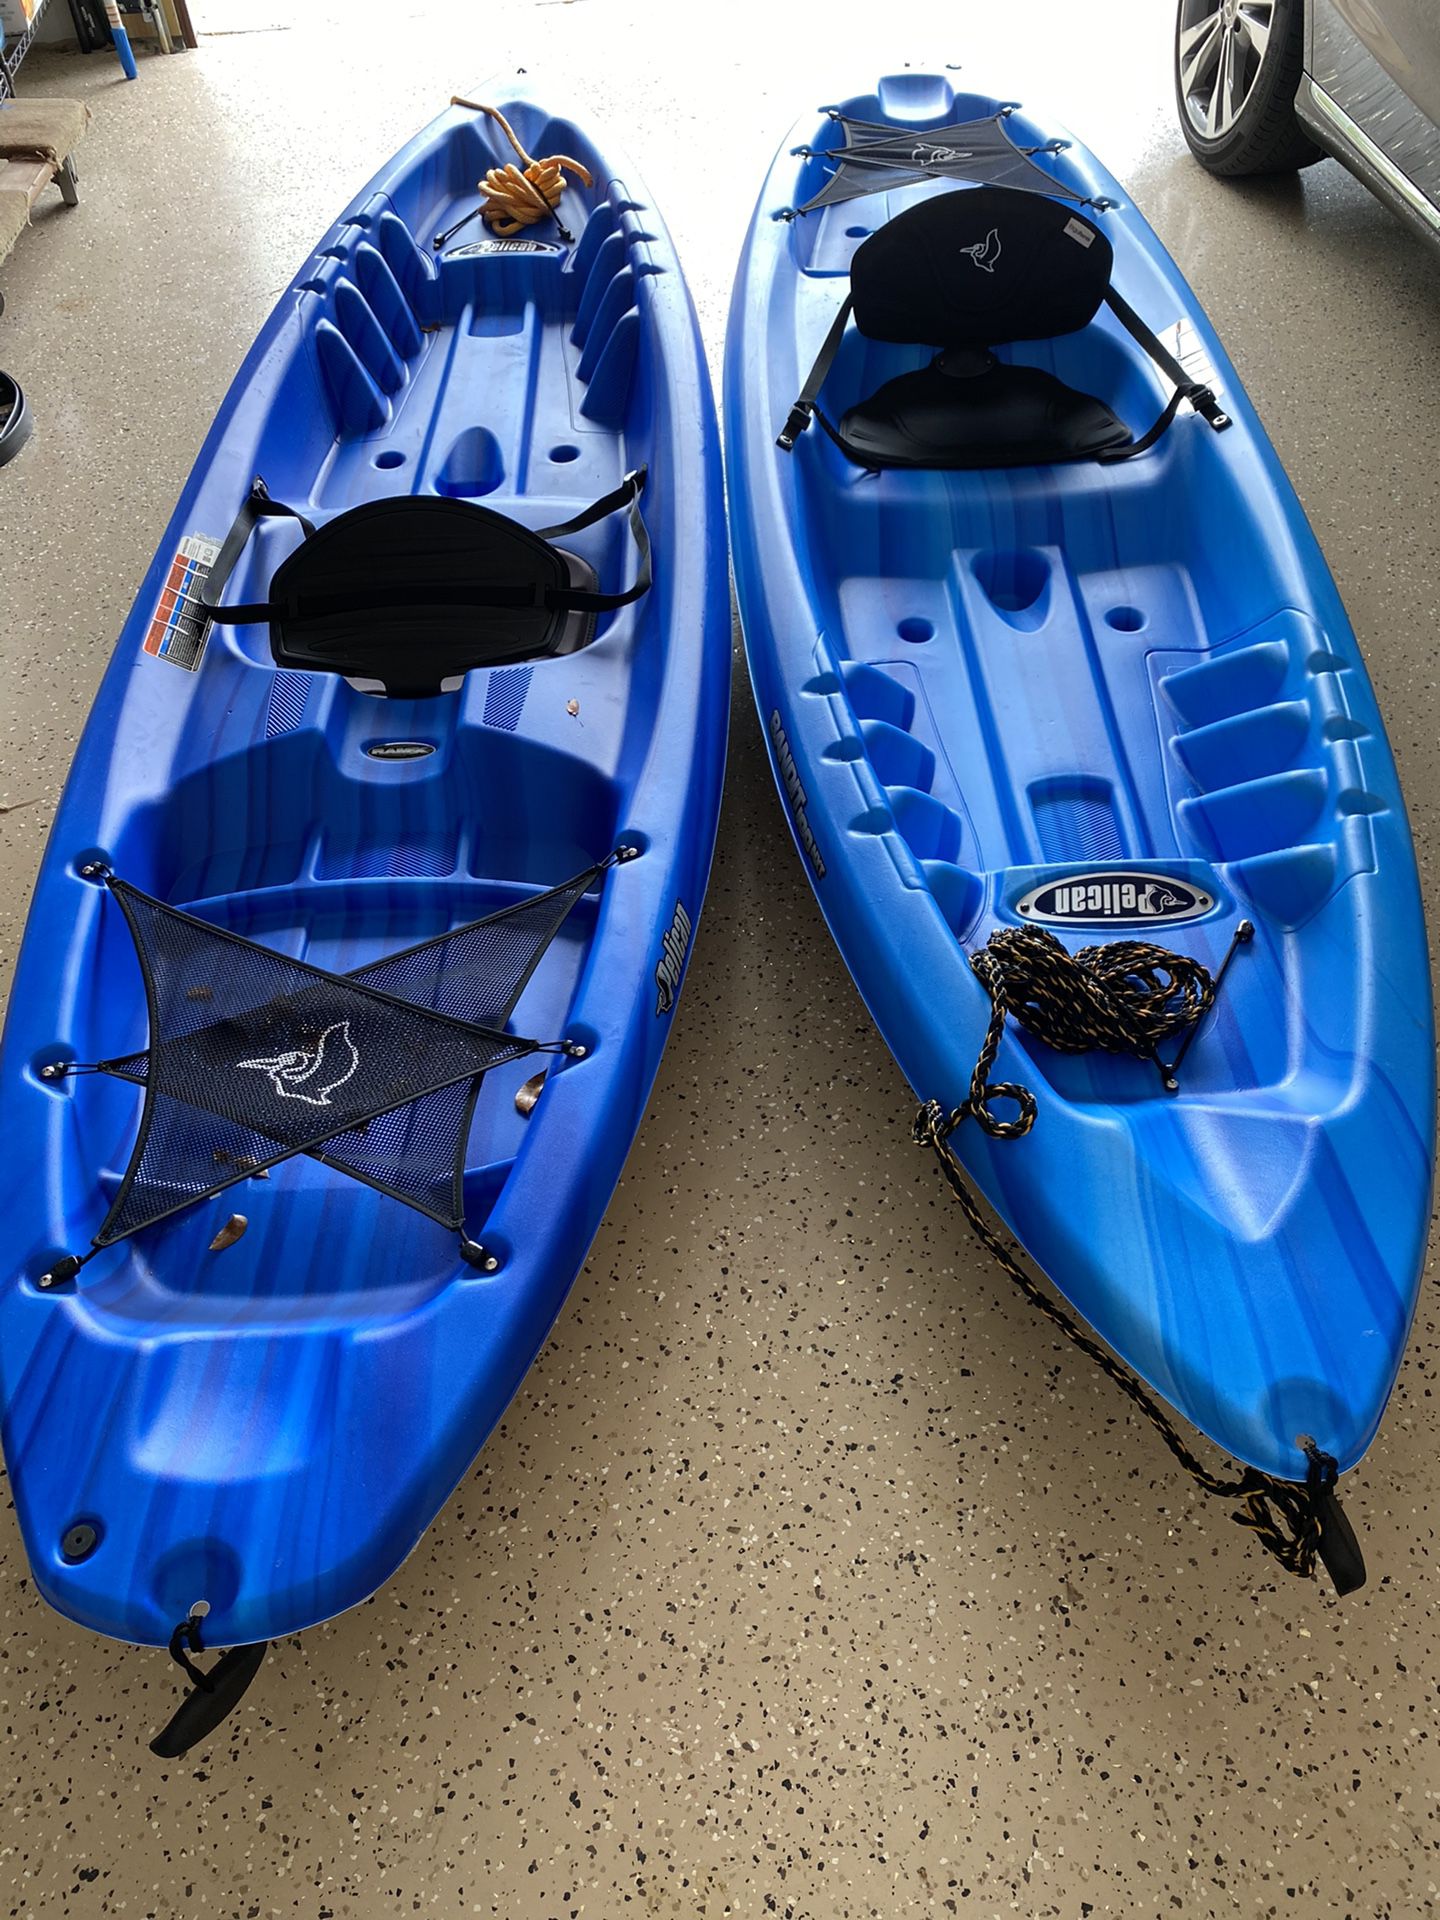 2 Pelican Bandit NXT 80 Kayaks -Price is per kayak.